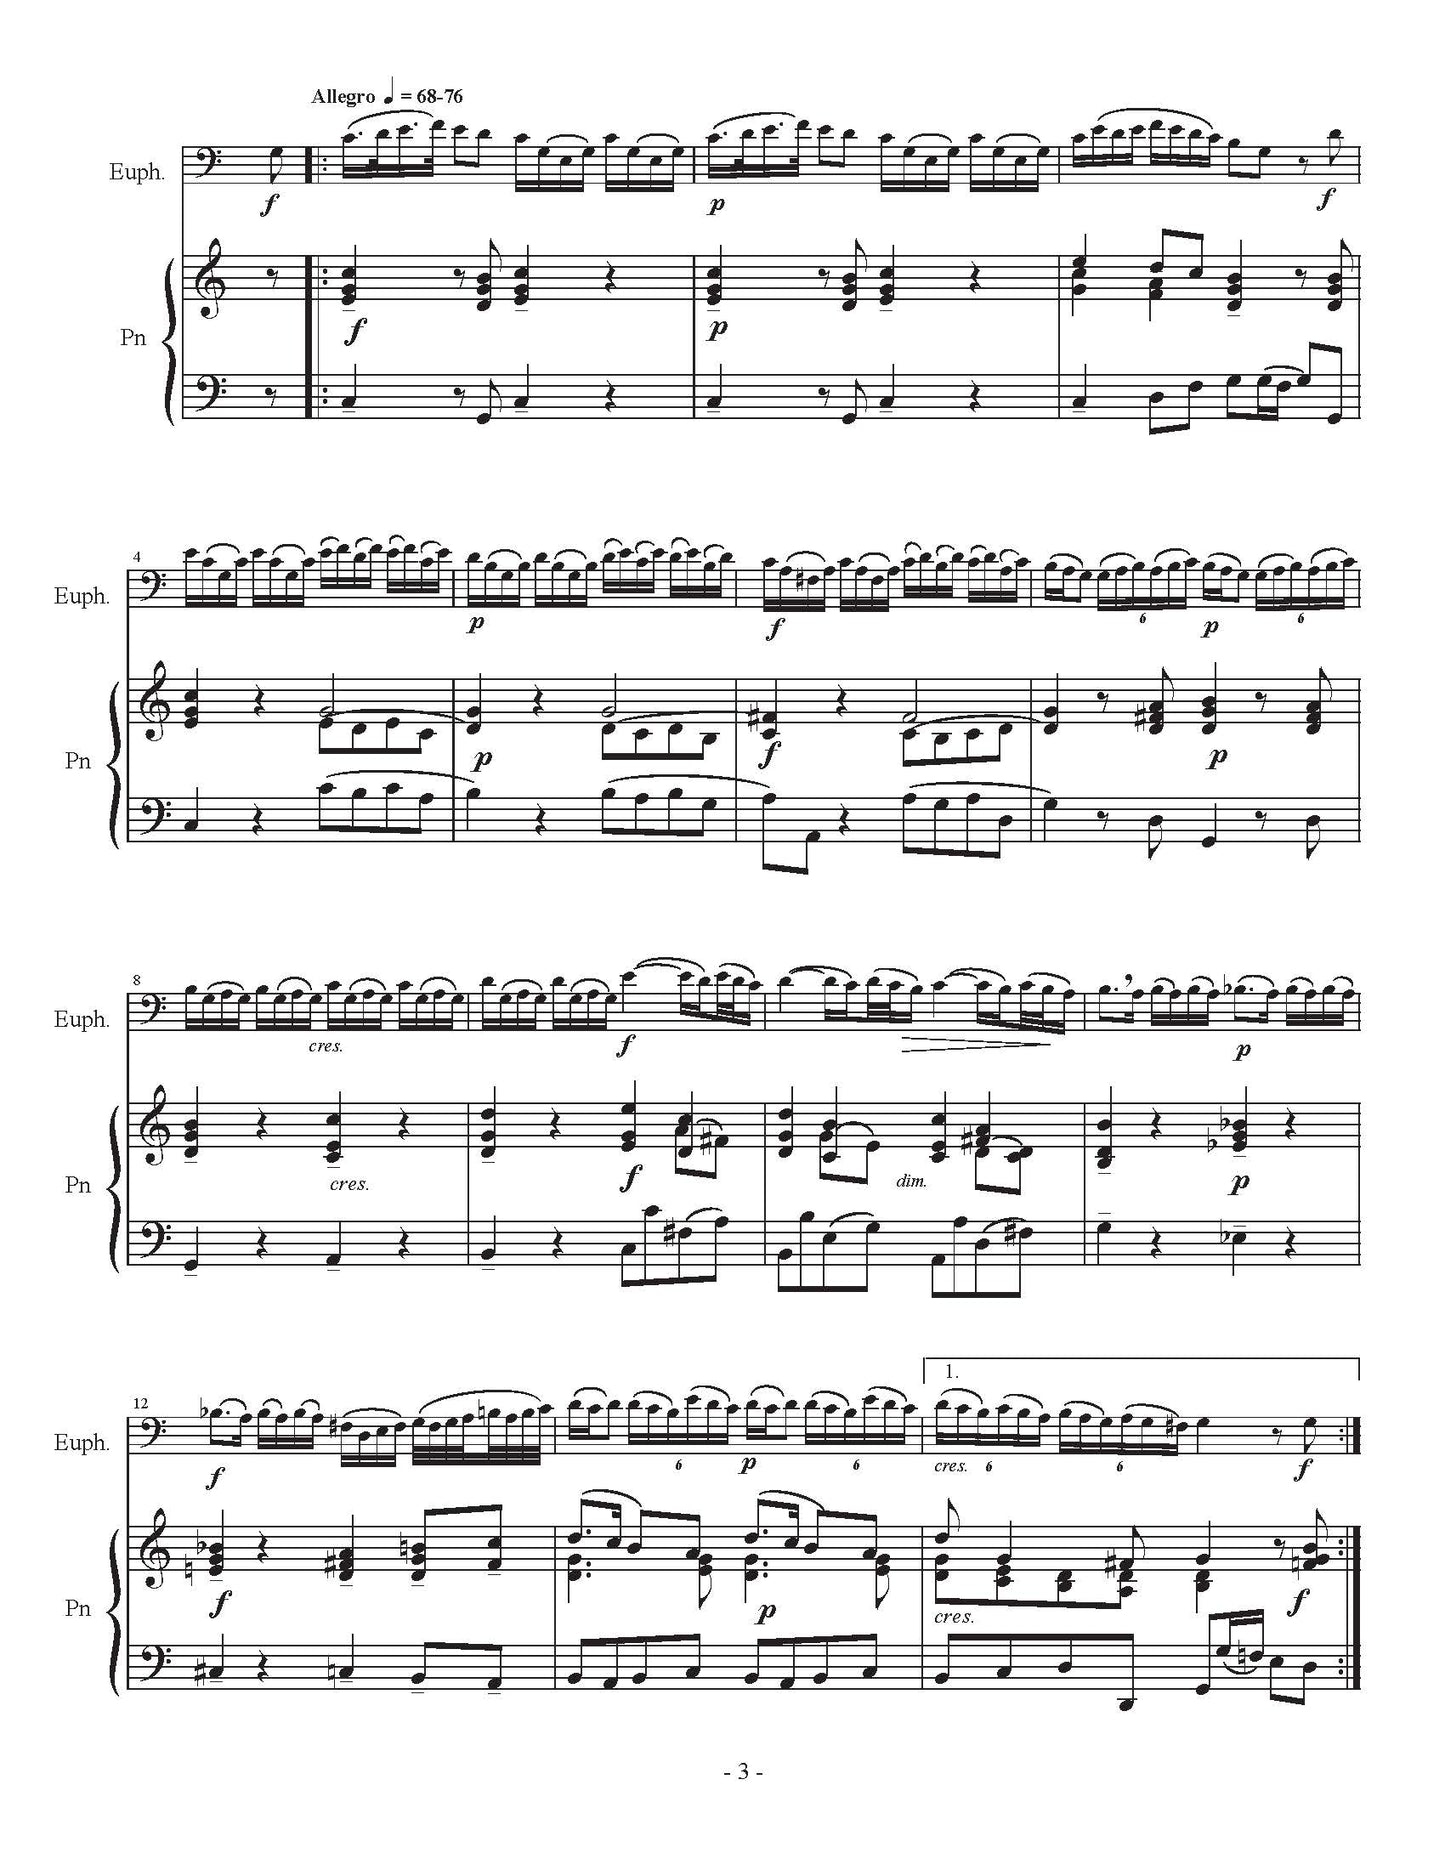 Fasch, J.F - Sonata in C